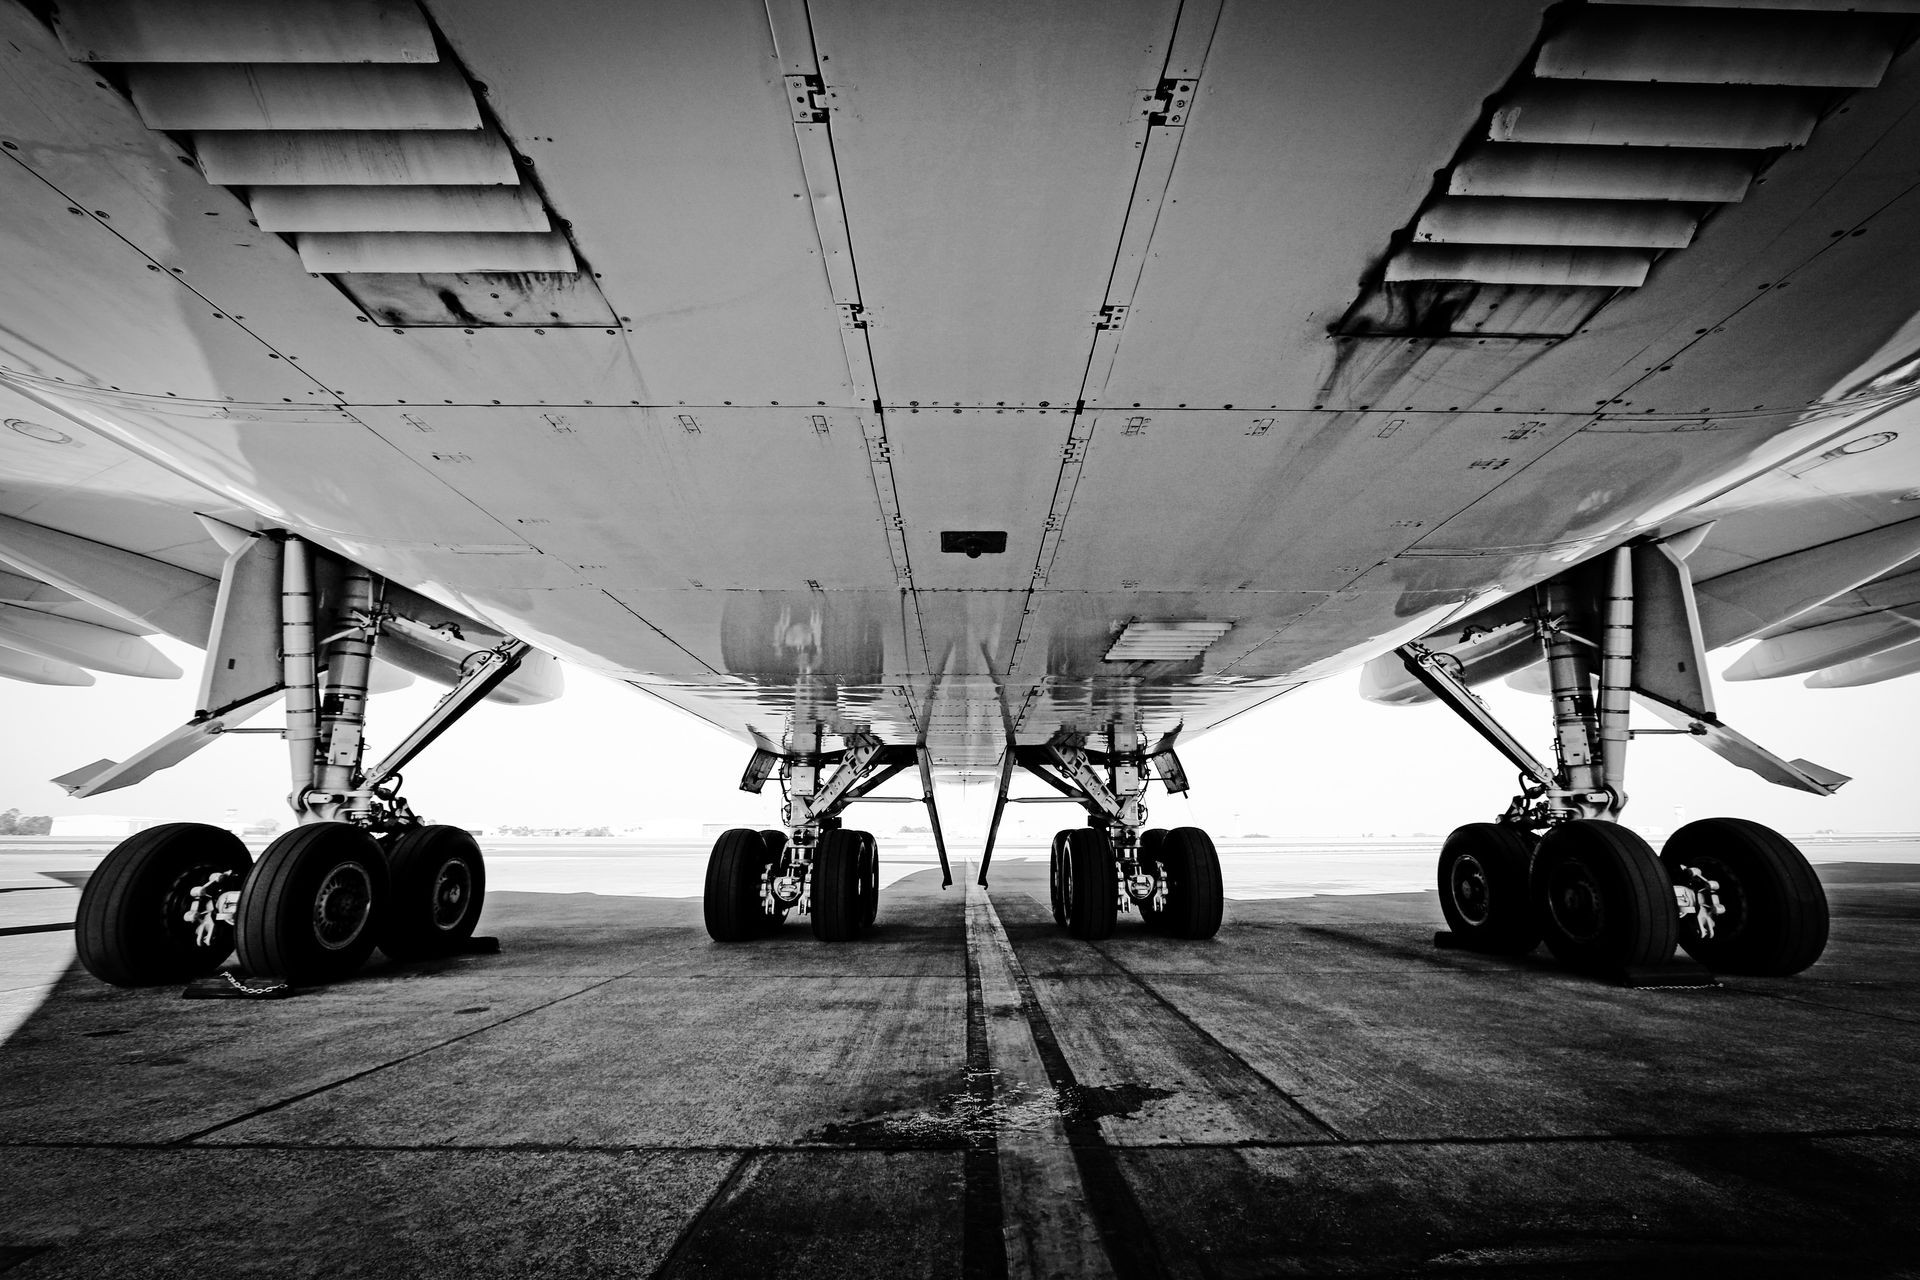 Underneath a Jumbo Jet: Airconditioning Packs & Main Landing Gear